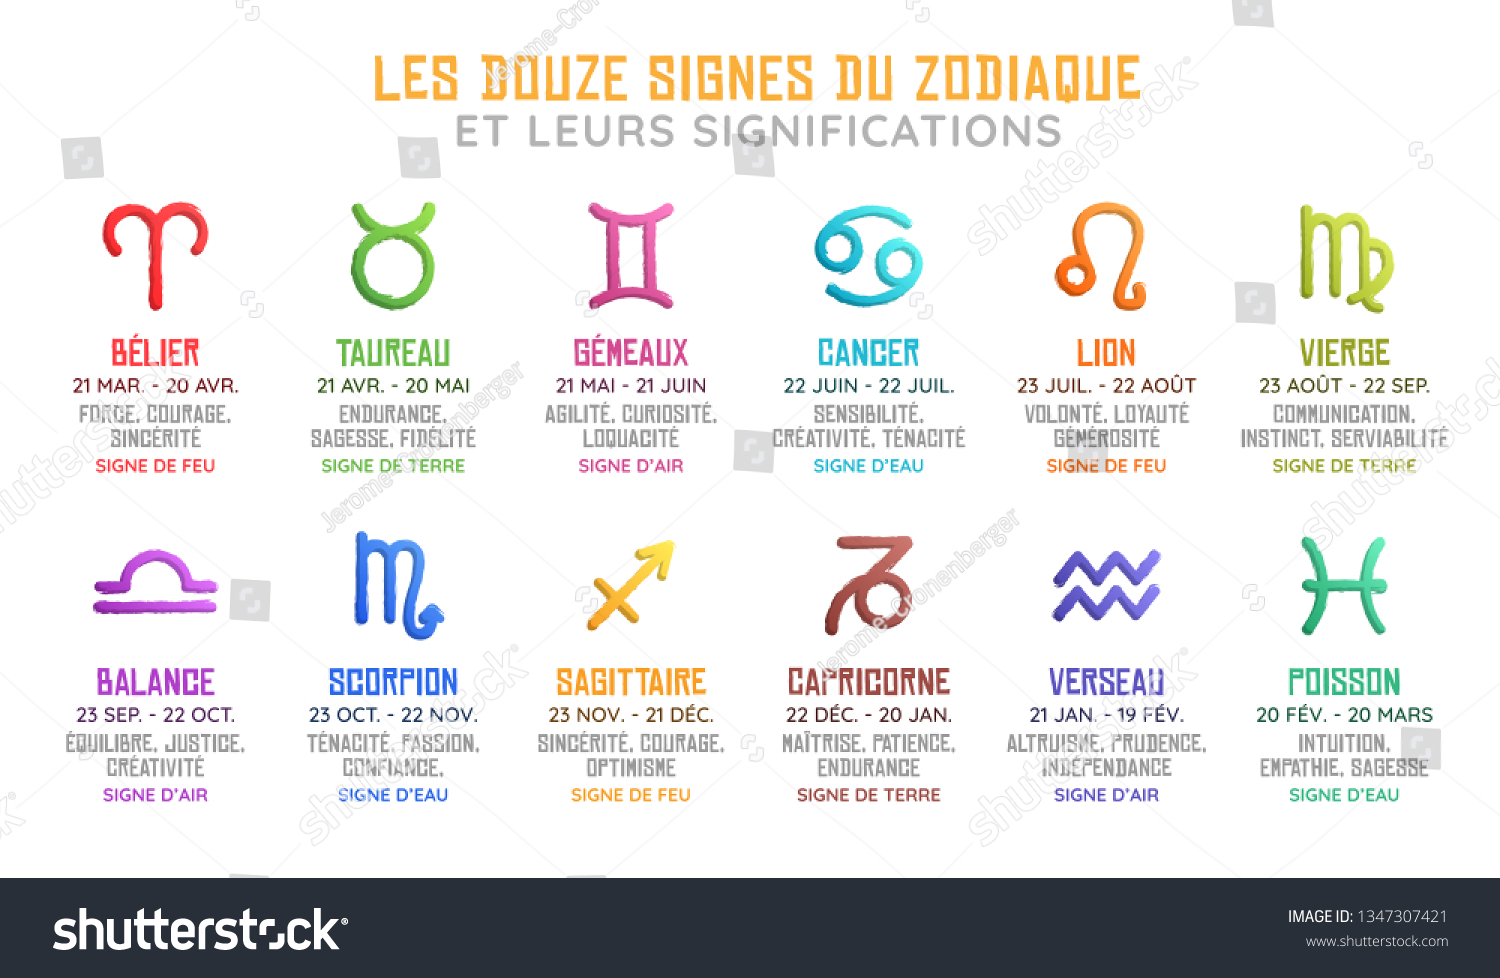 Horoscope meaning